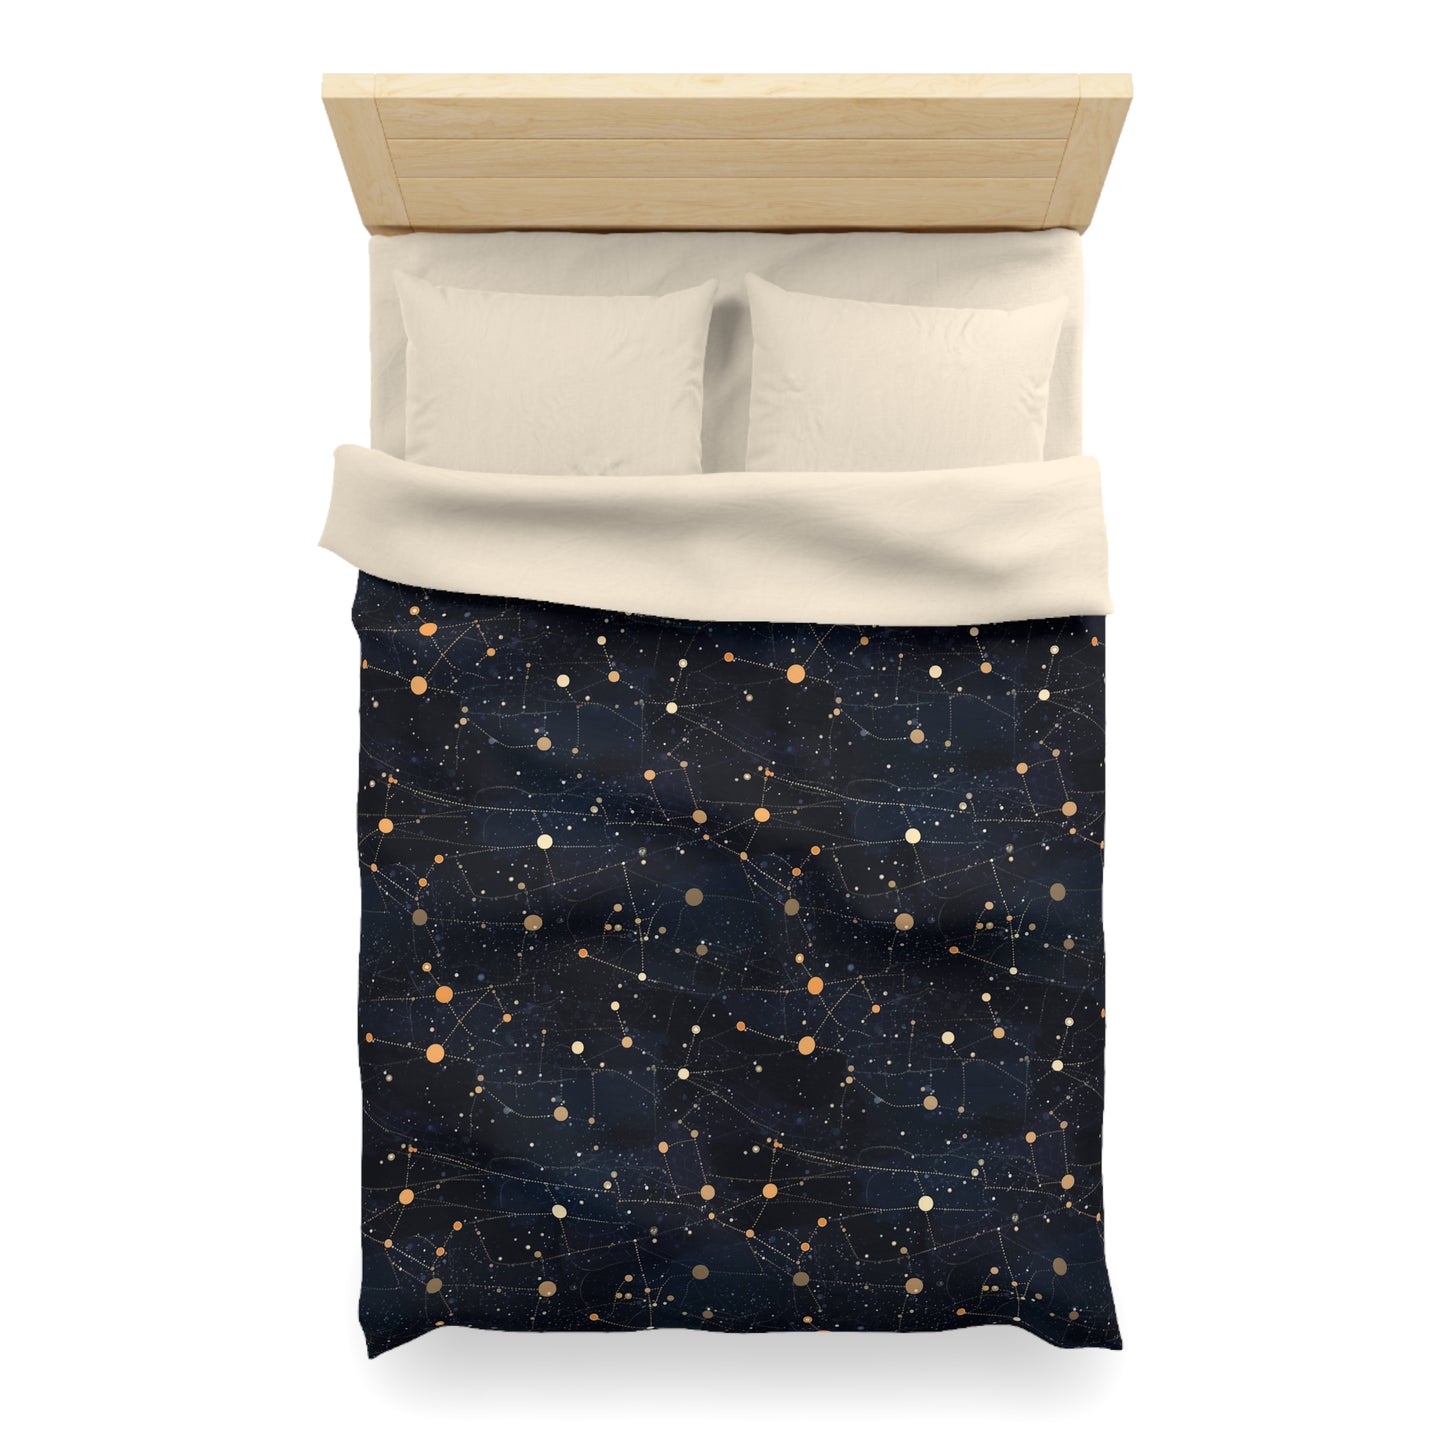 Constellations Duvet Cover, Stars Space Night Sky Bedding Queen King Full Twin XL Microfiber Unique Designer Bed Quilt Bedroom Decor